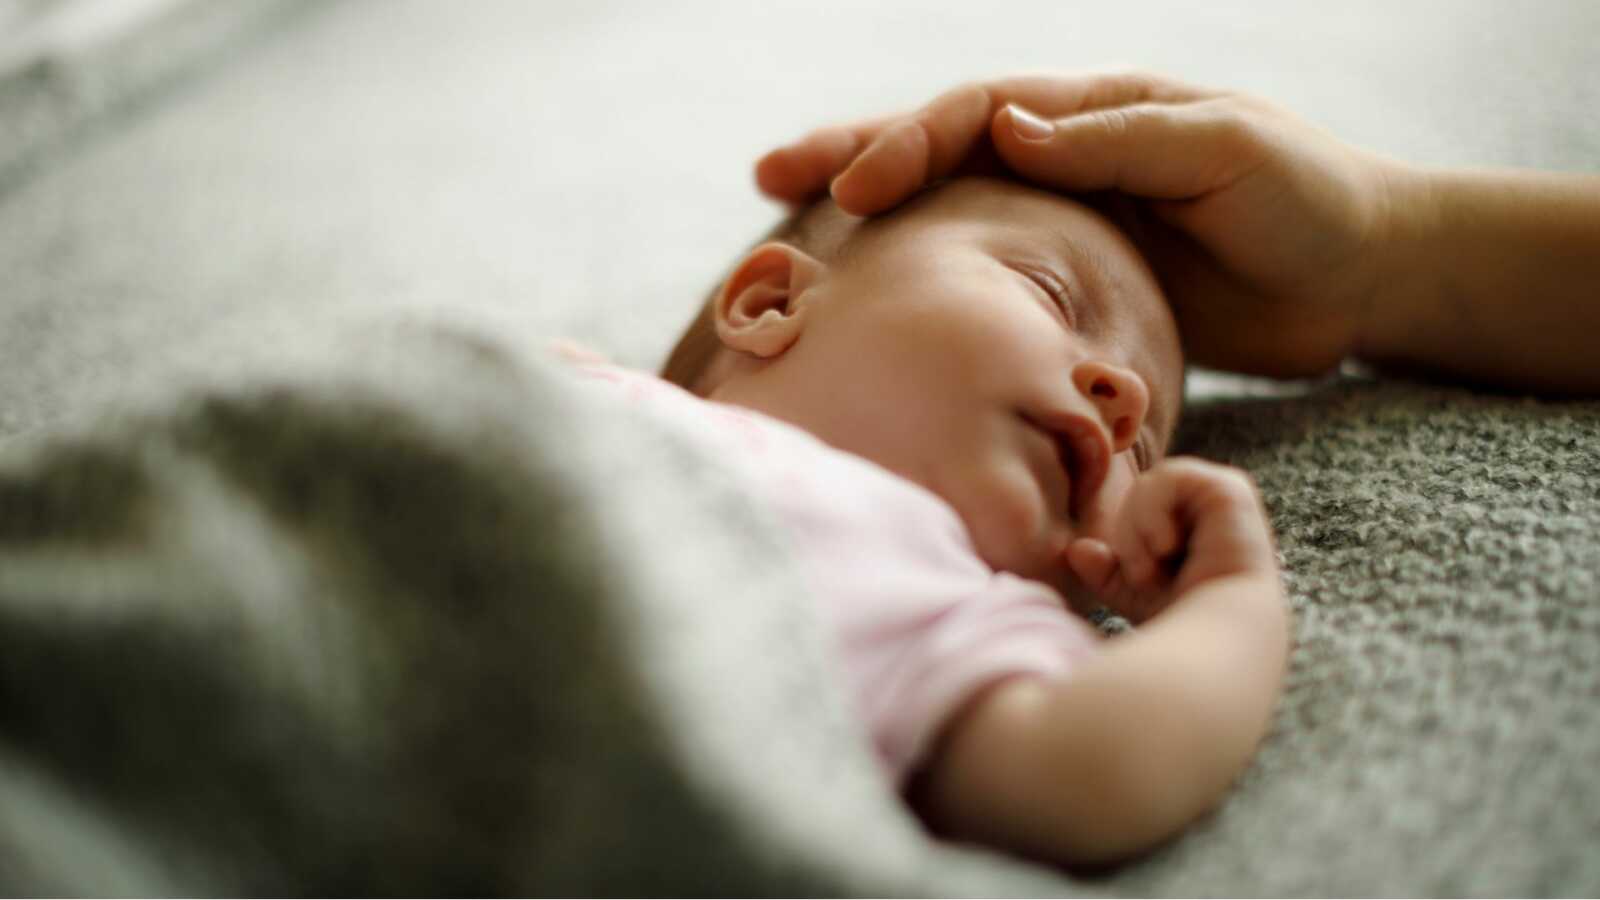 sleeping newborn with adoptive mother's hand on their head